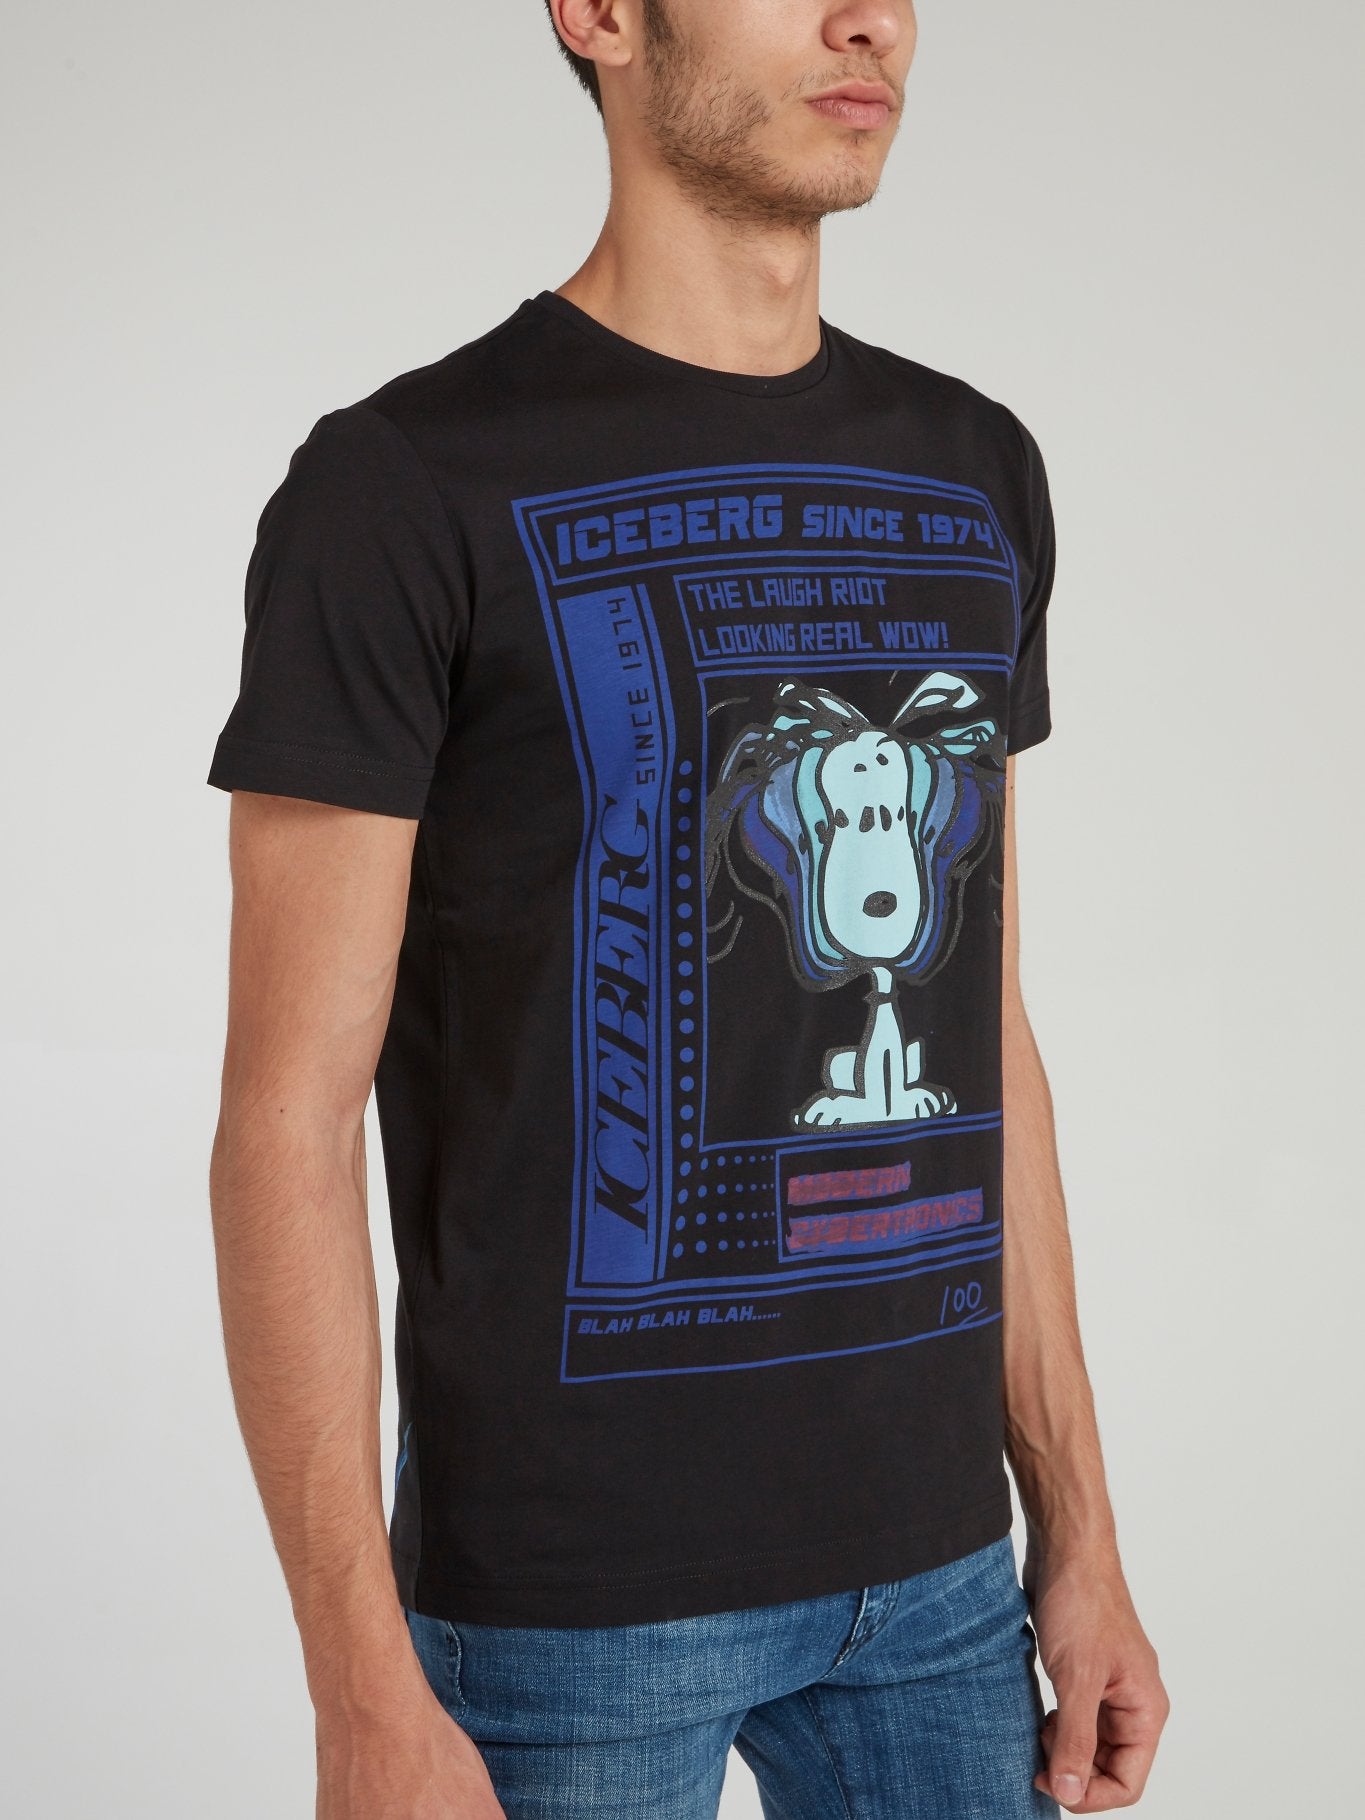 Snoopy Black Logo Cotton T-Shirt